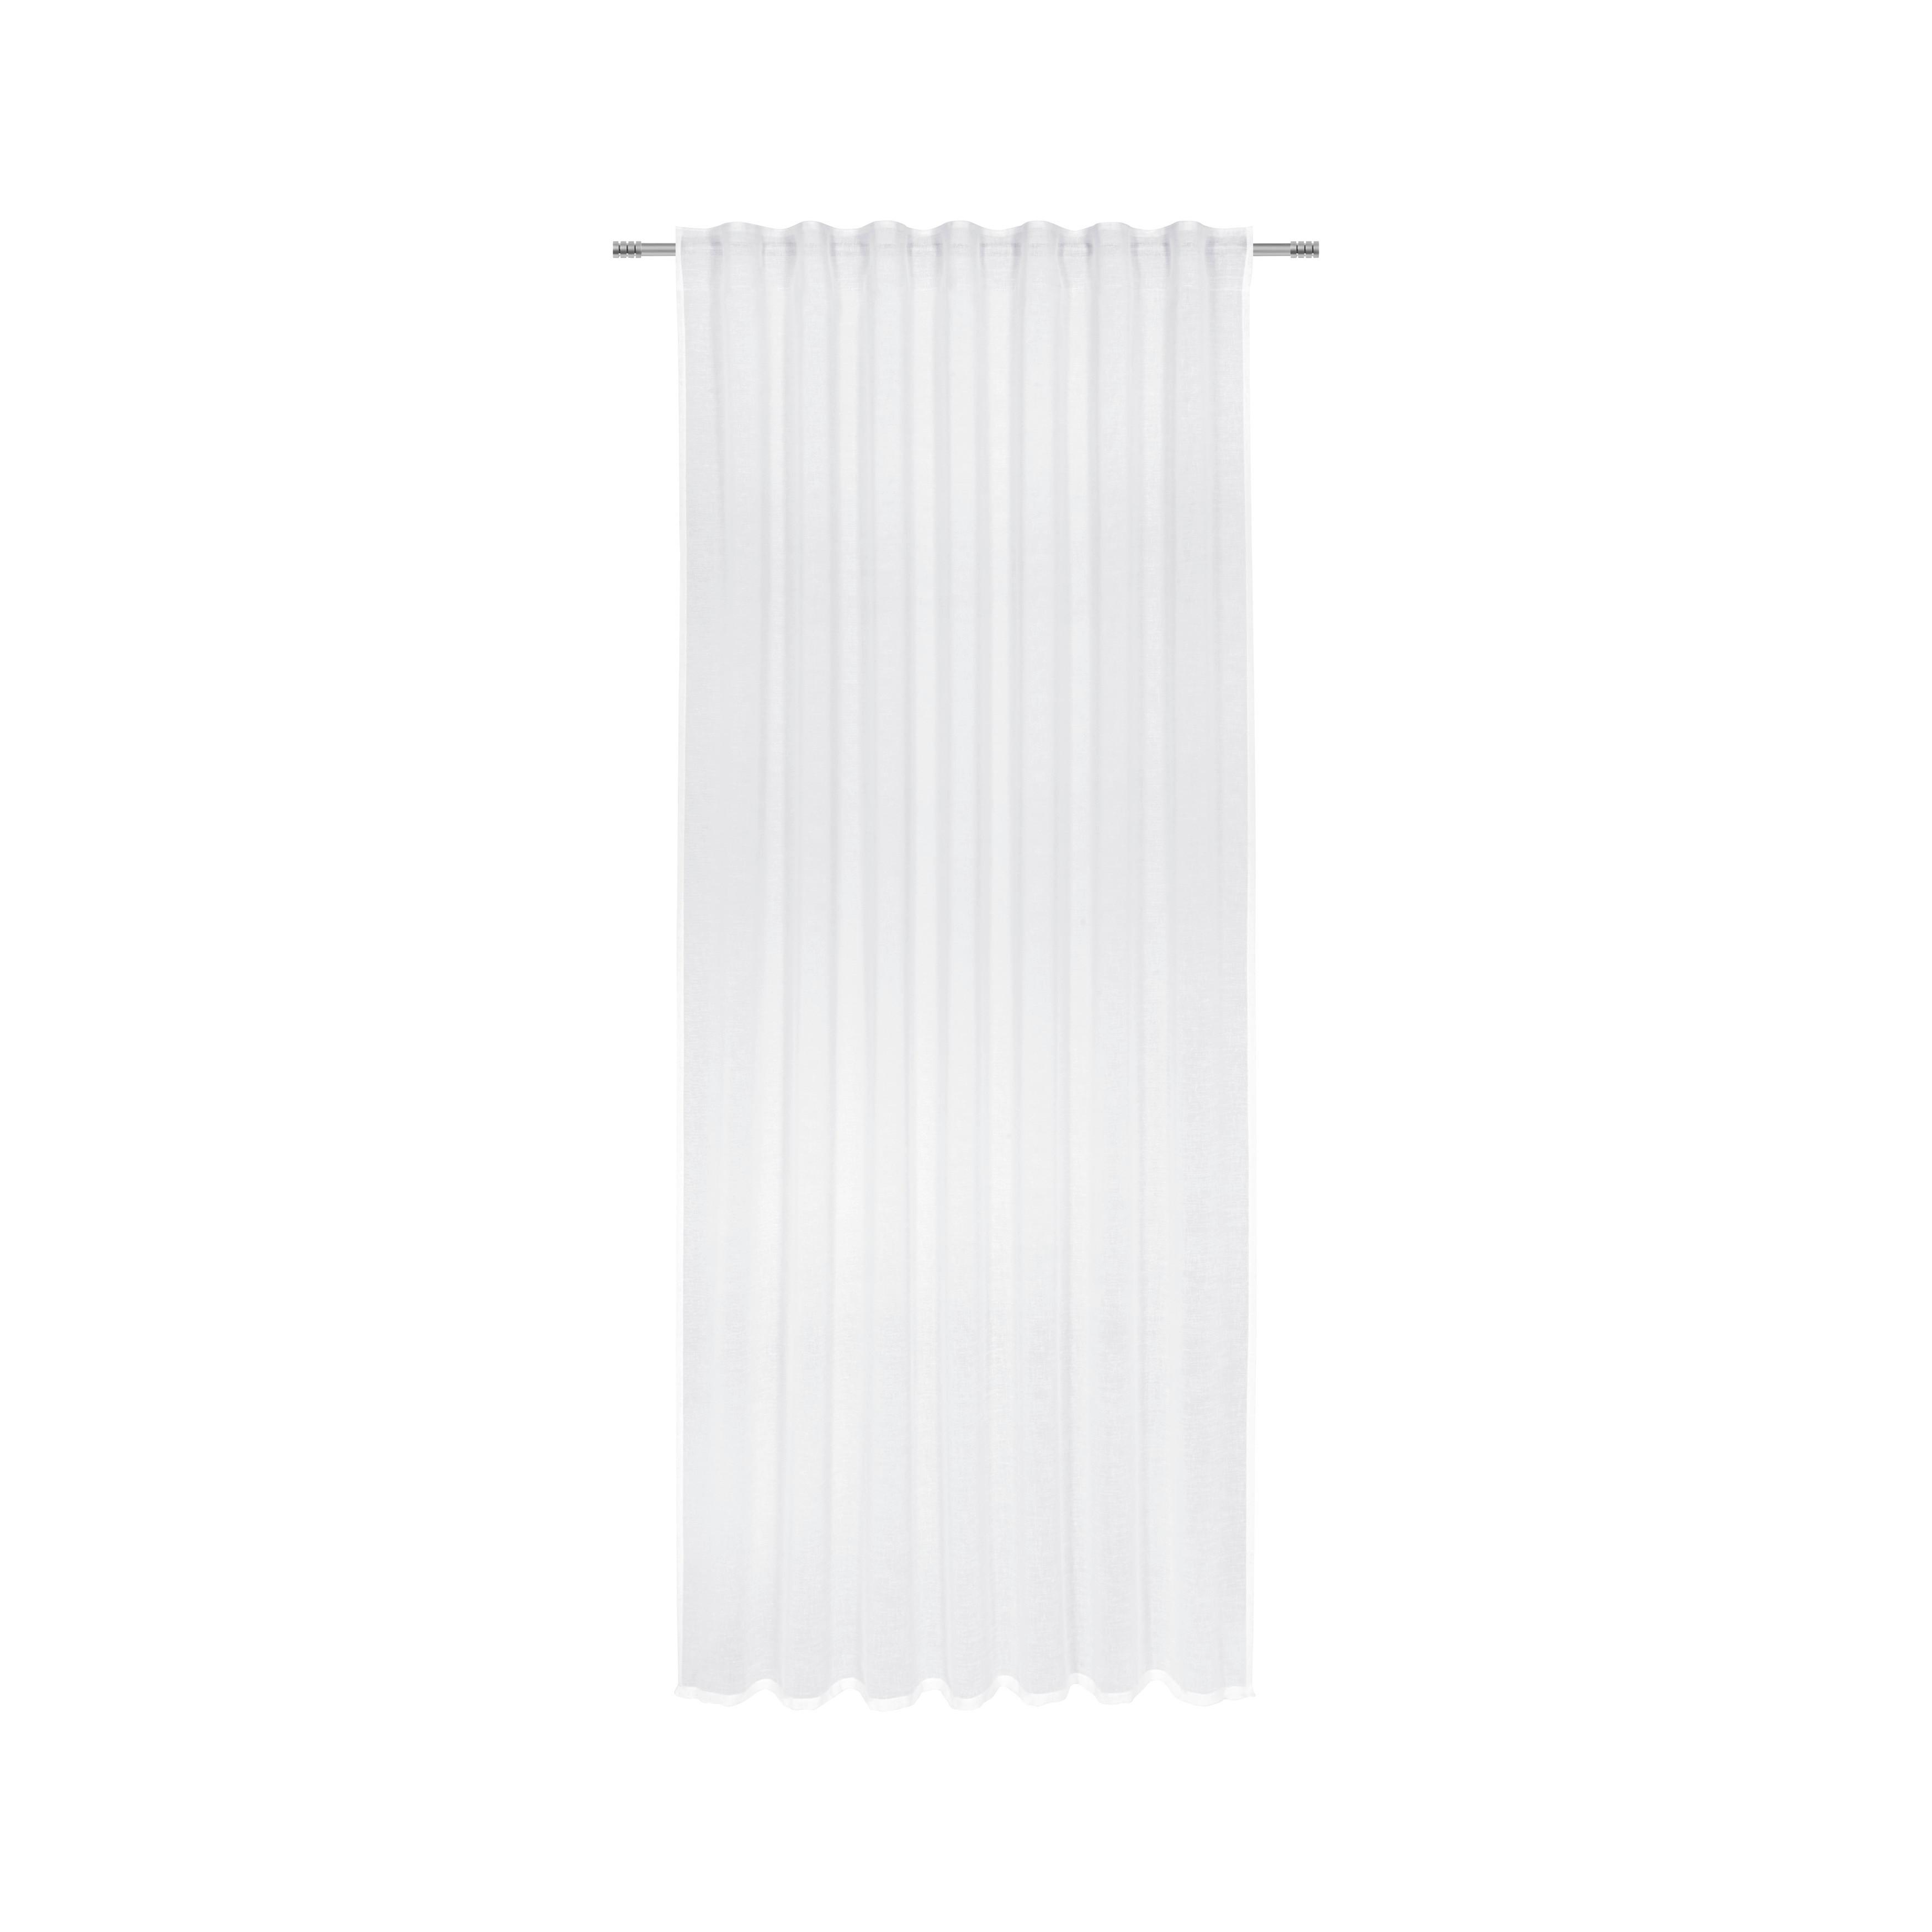 Perdea prefabricată Sigrid - alb, Romantik / Landhaus, textil (140/245cm) - Premium Living